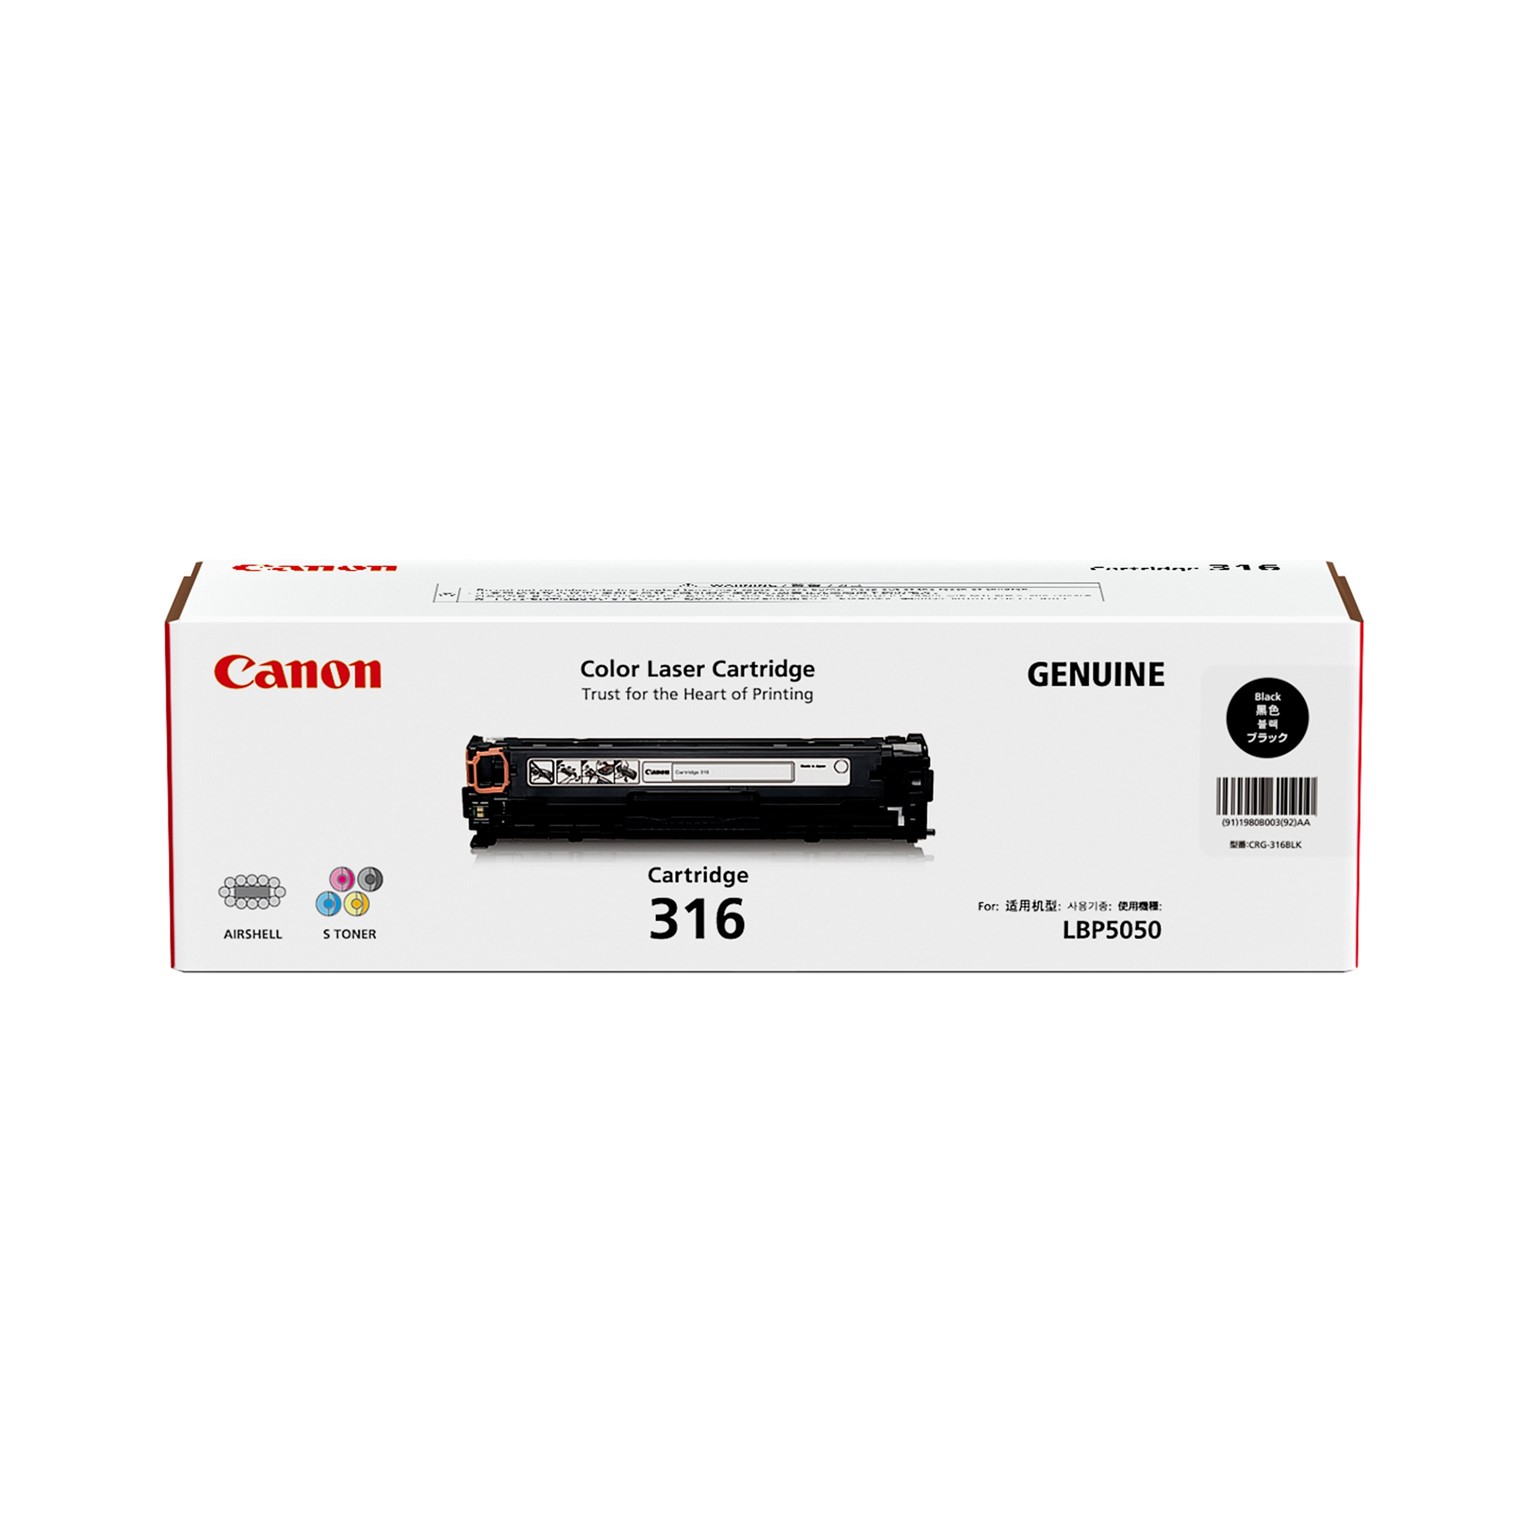 Canon Cartridge-316 Black